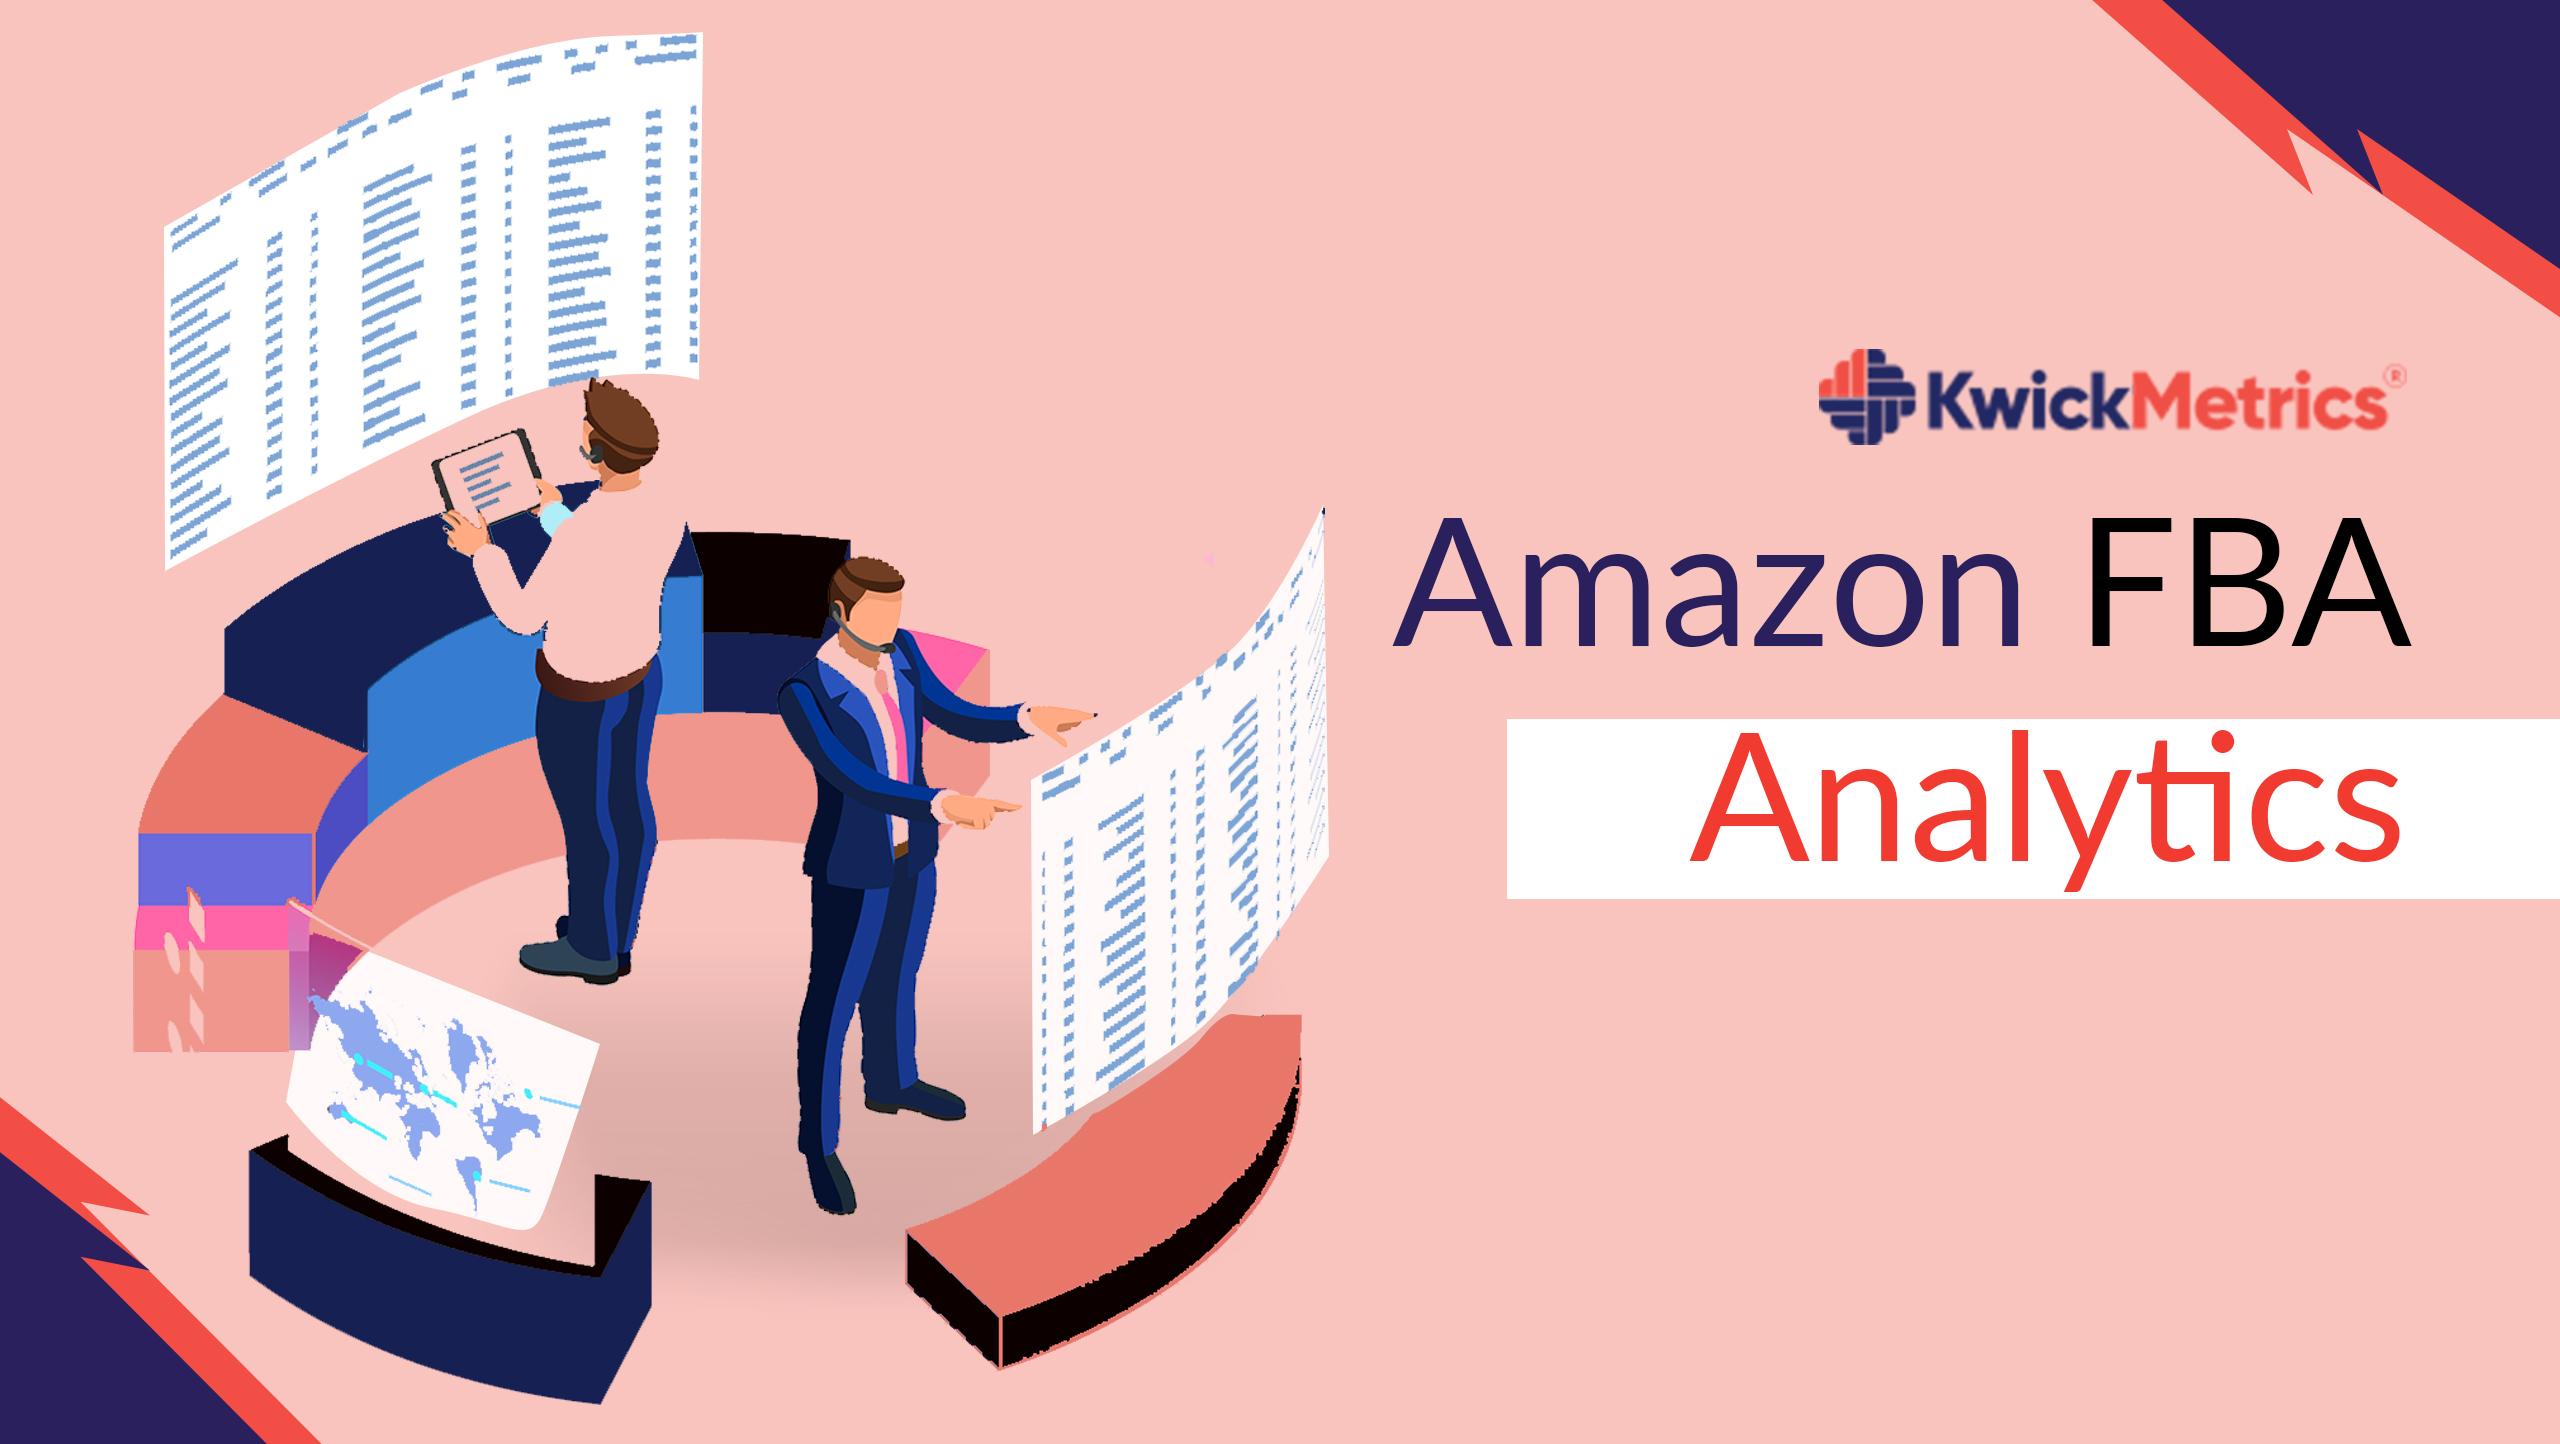 Amazon FBA Fees to Manage Using Amazon FBA Analytics